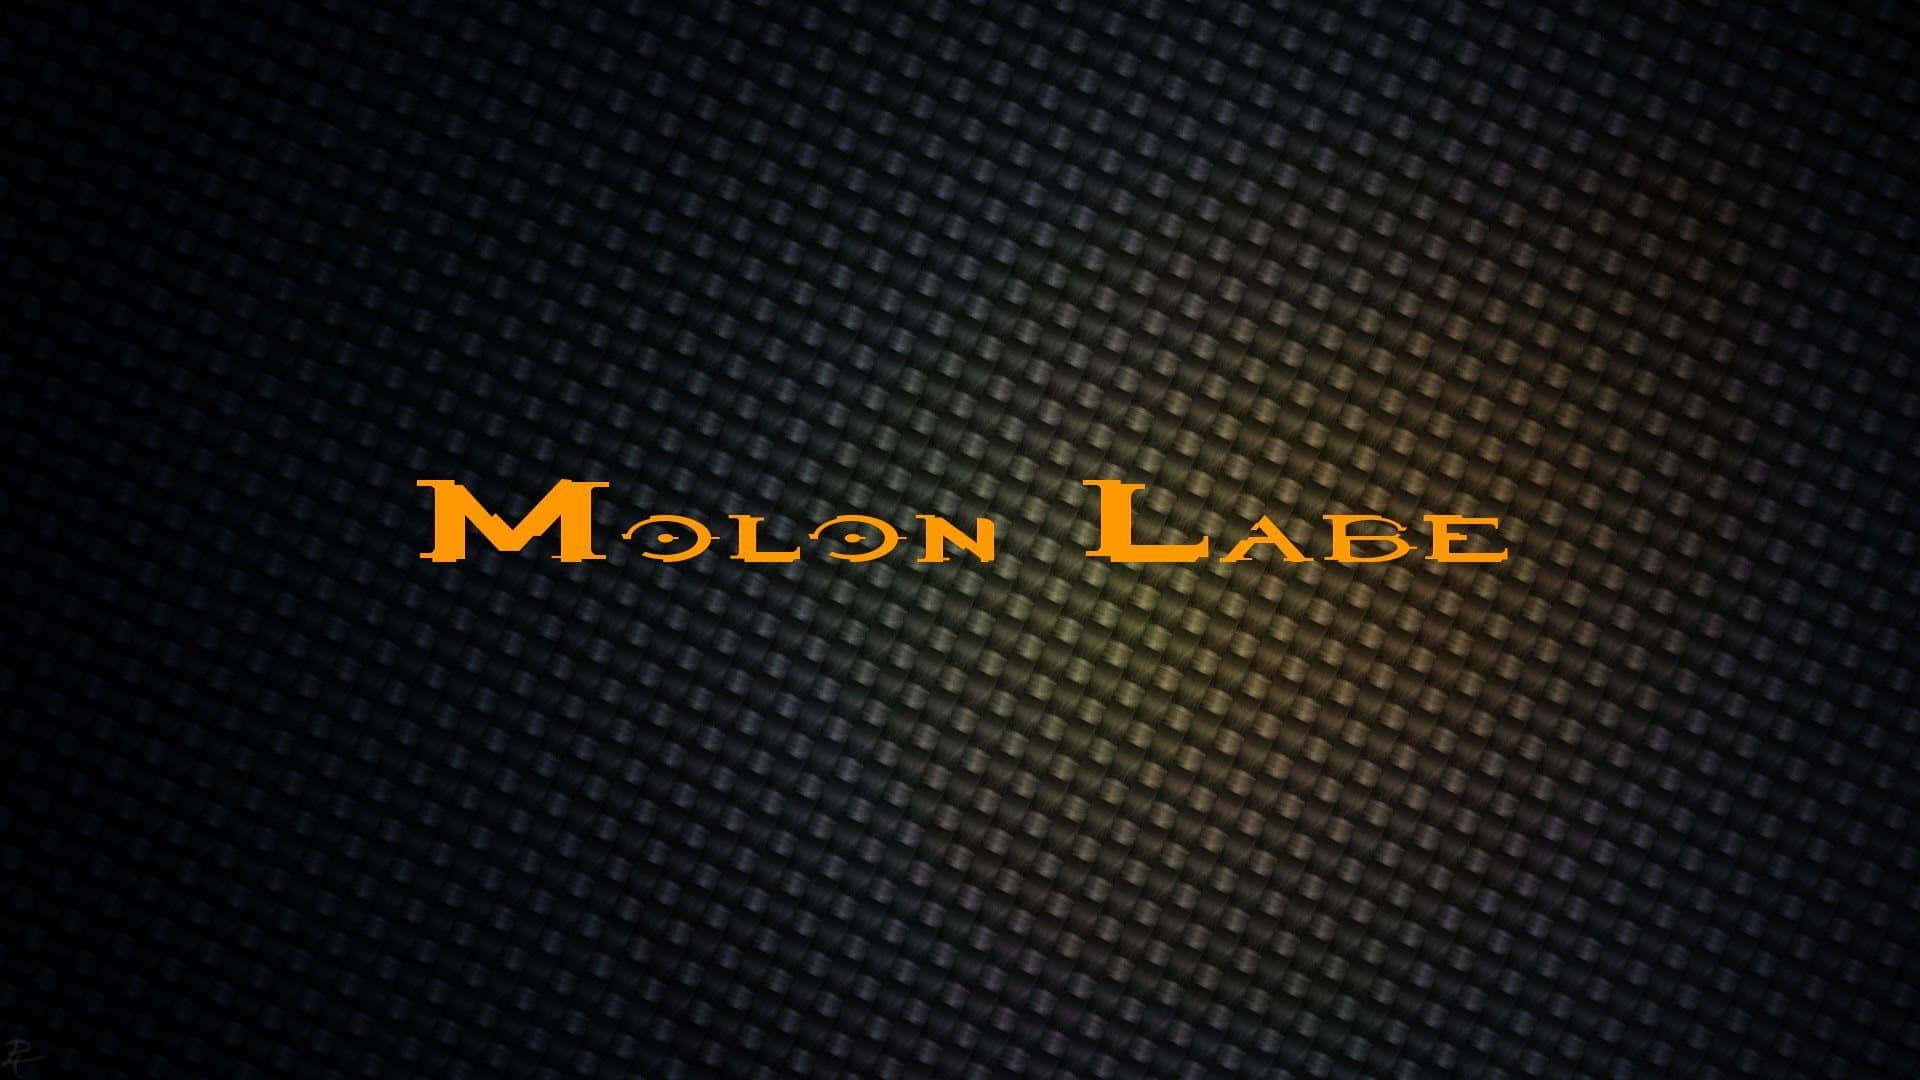 Mollon Lab Wallpaper Wallpaper